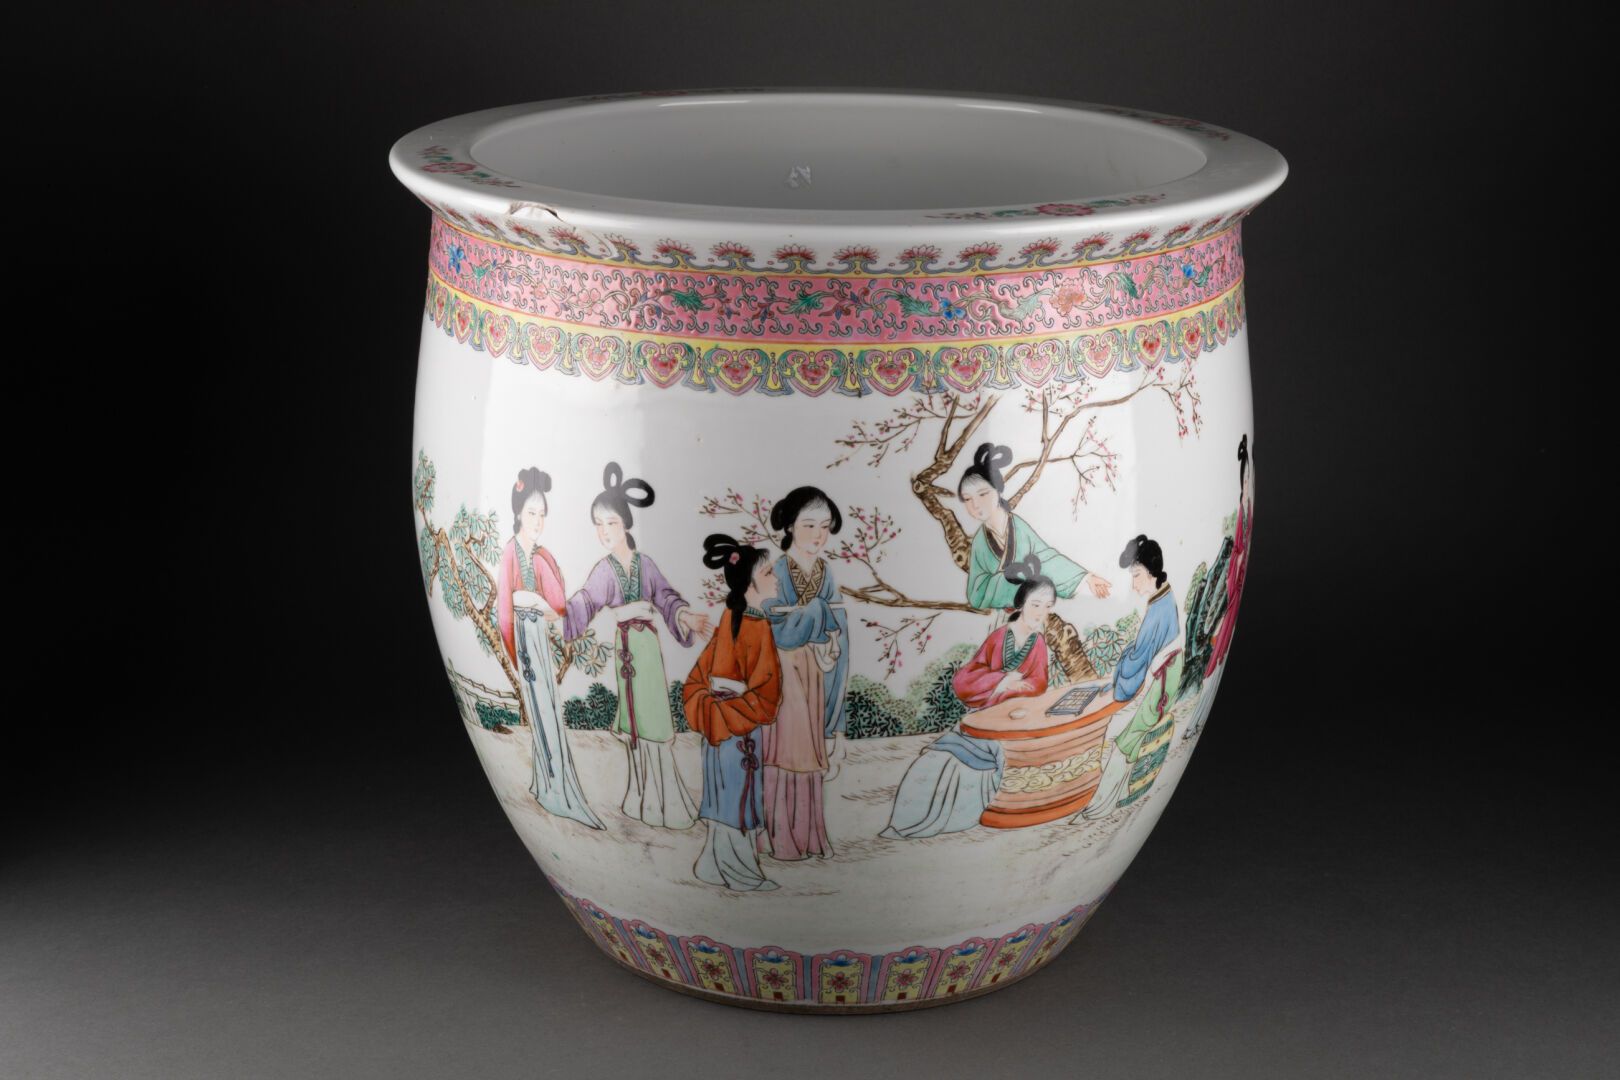 CHINE - XXe siècle 在花园里与宫廷里的女士们在一起的JUG

瓷器和多色珐琅彩

H.37 cm - D. 40 cm

芯片和修复